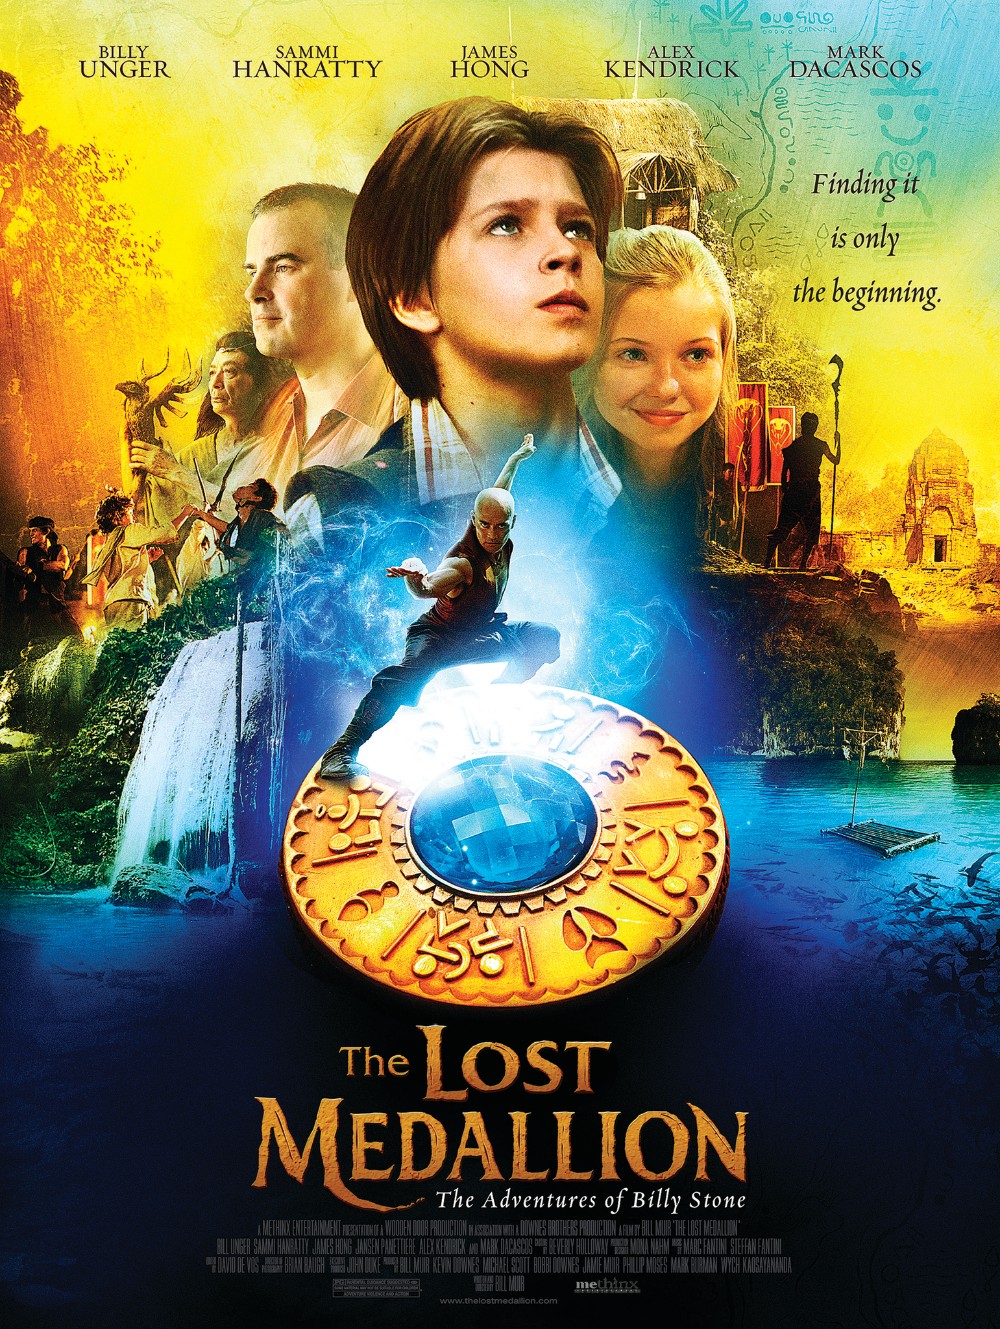 The Lost Medallion The Adventures Of Billy Stone (2013) [720p] WEBRip (x264) Efc2926a7fa98dd3a80222021b4258ce